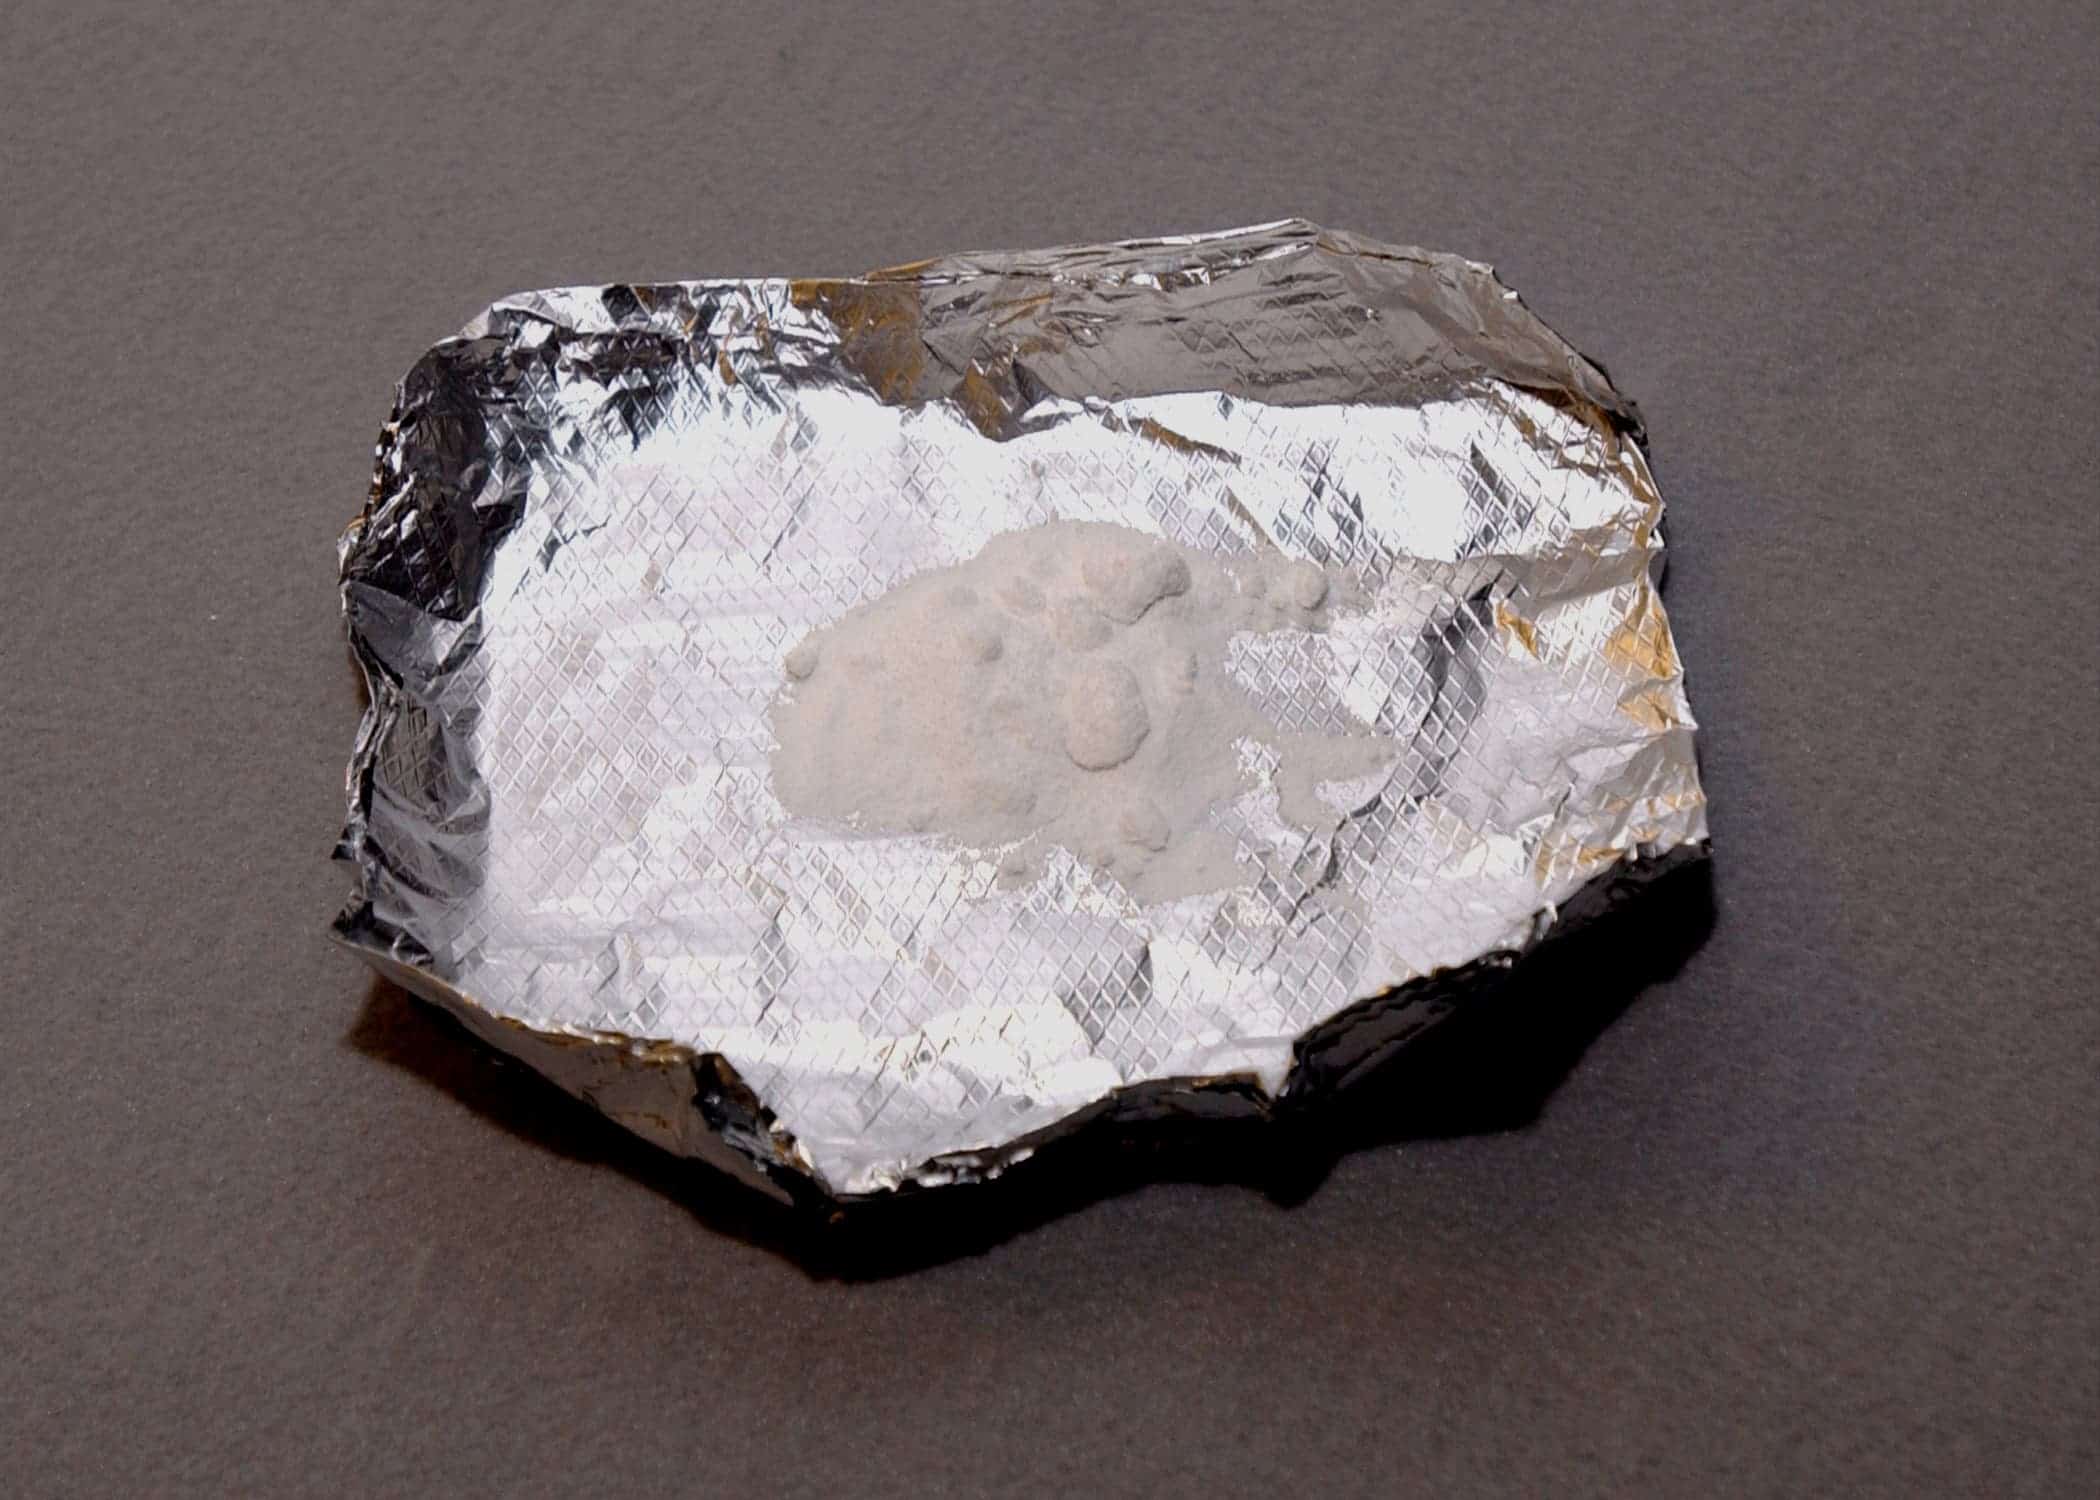 Powder meth in foil. Credit: Wikimedia Commons.